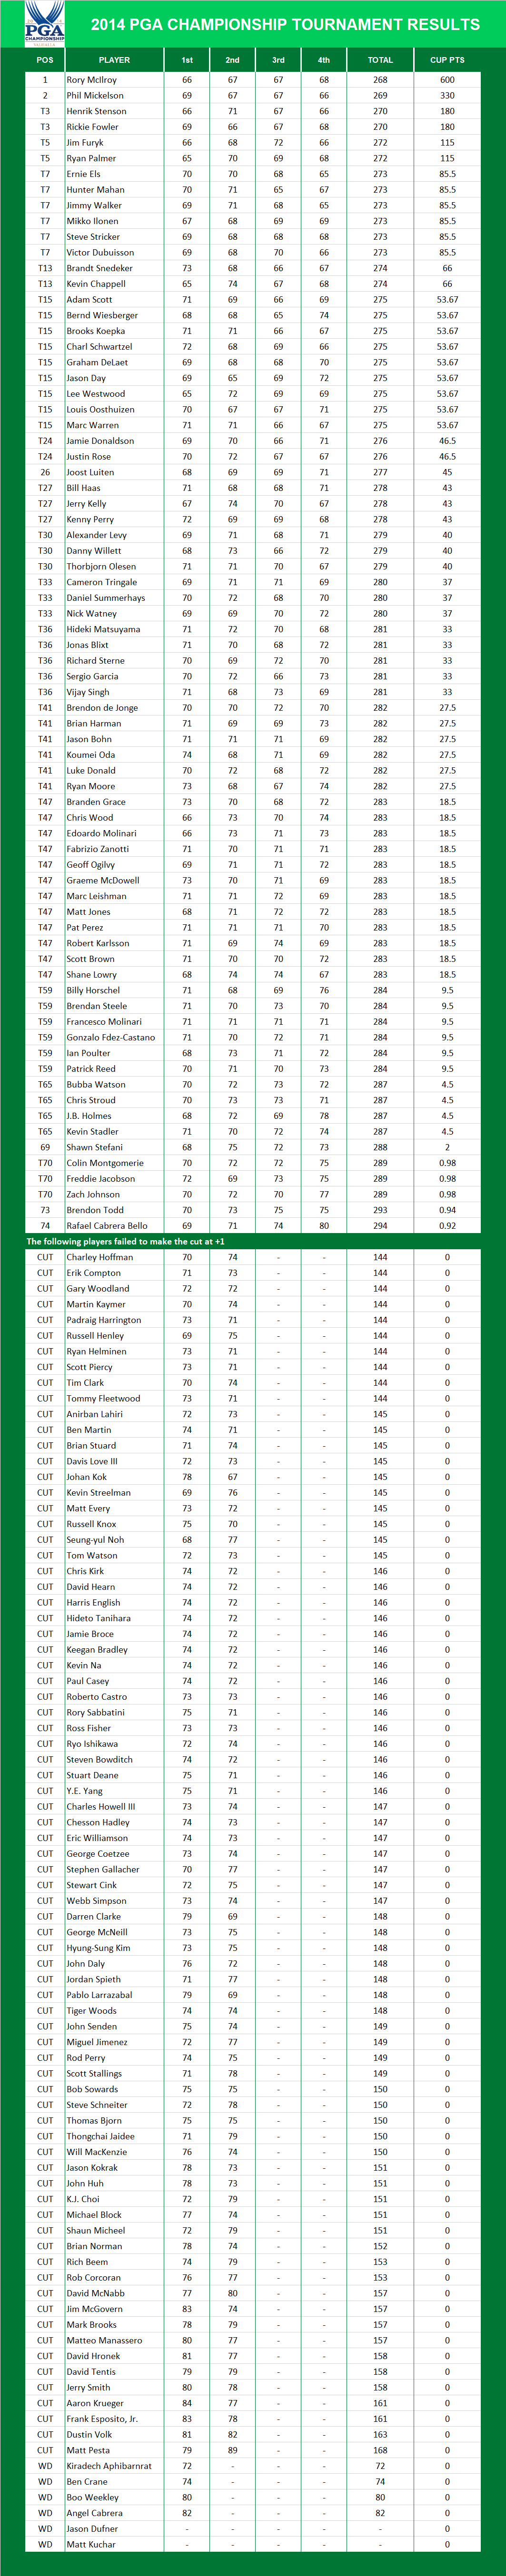 2014 PGA Championship Results